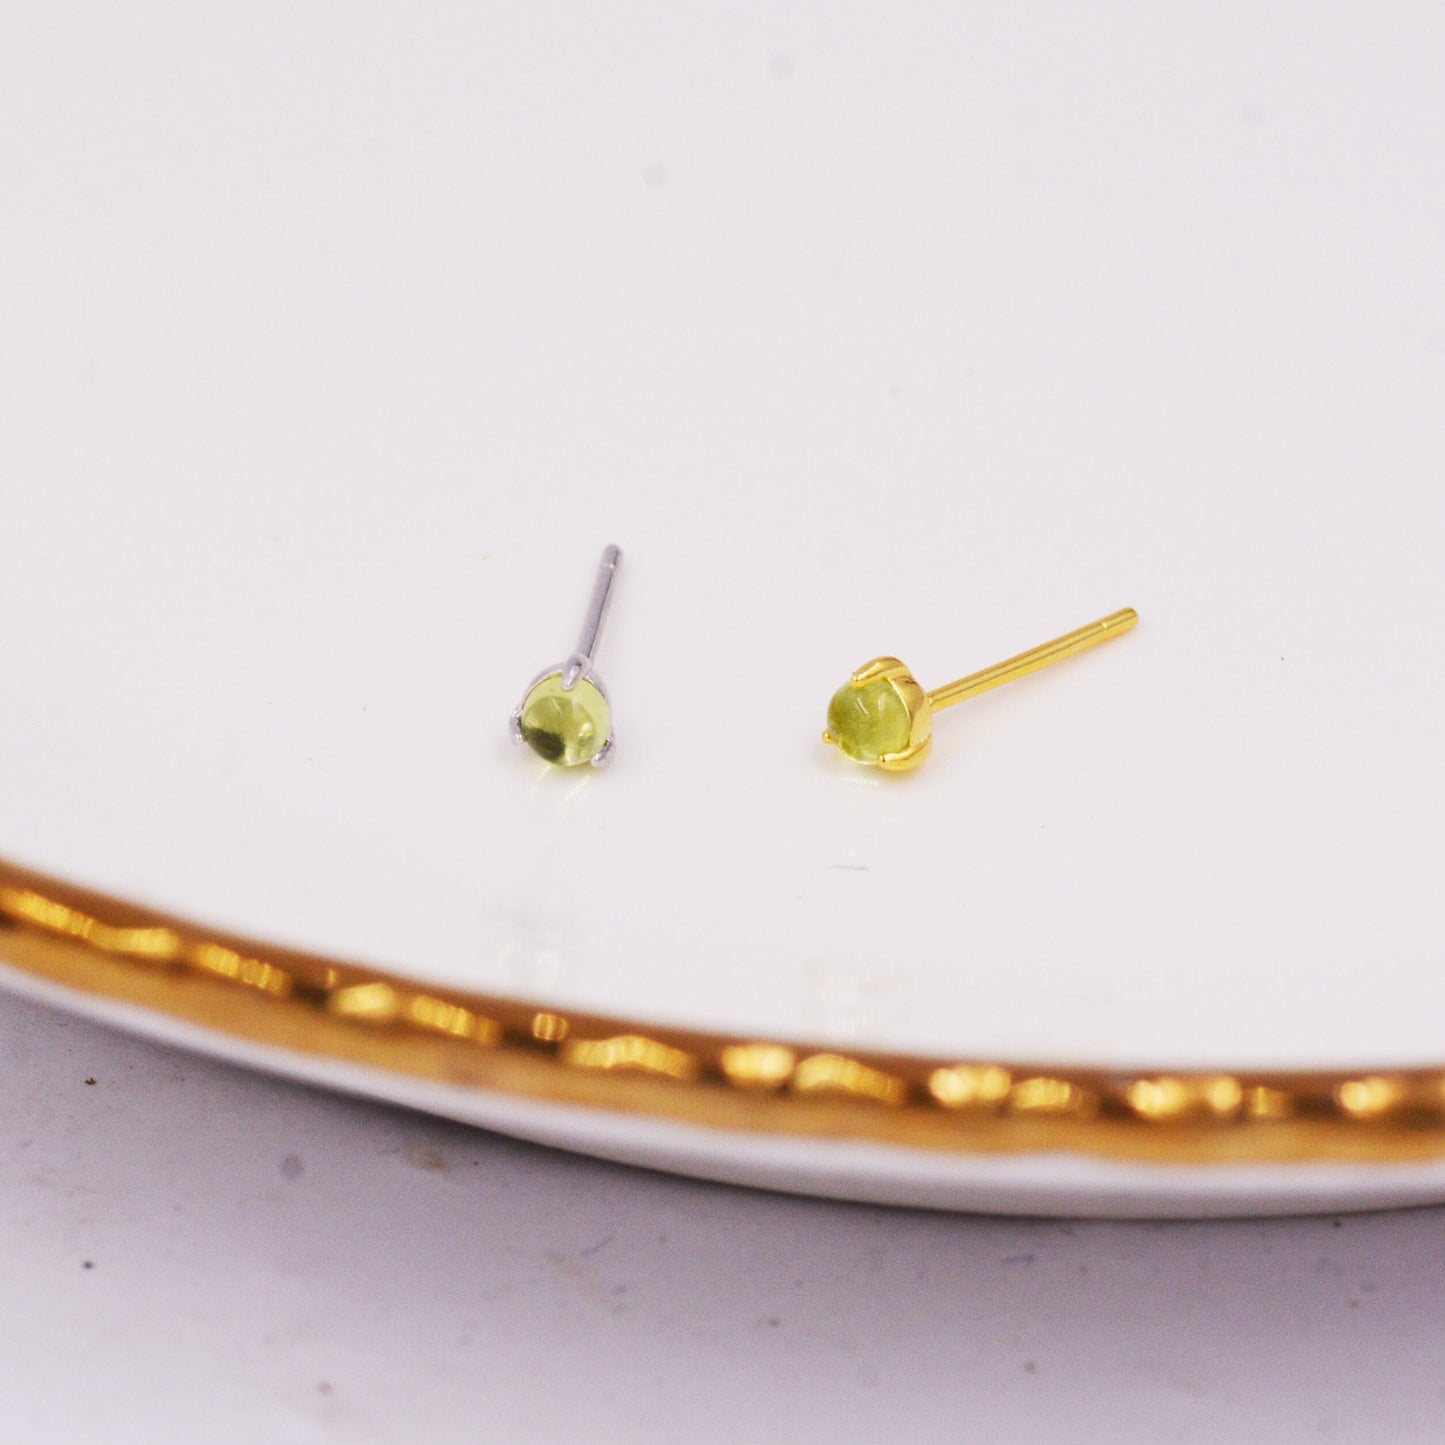 Genuine Green Peridot 3mm Tiny Stud Earrings in Sterling Silver, Real Peridot Crystals Stud, Semi-precious Gemstone, Simple, Minimalist,